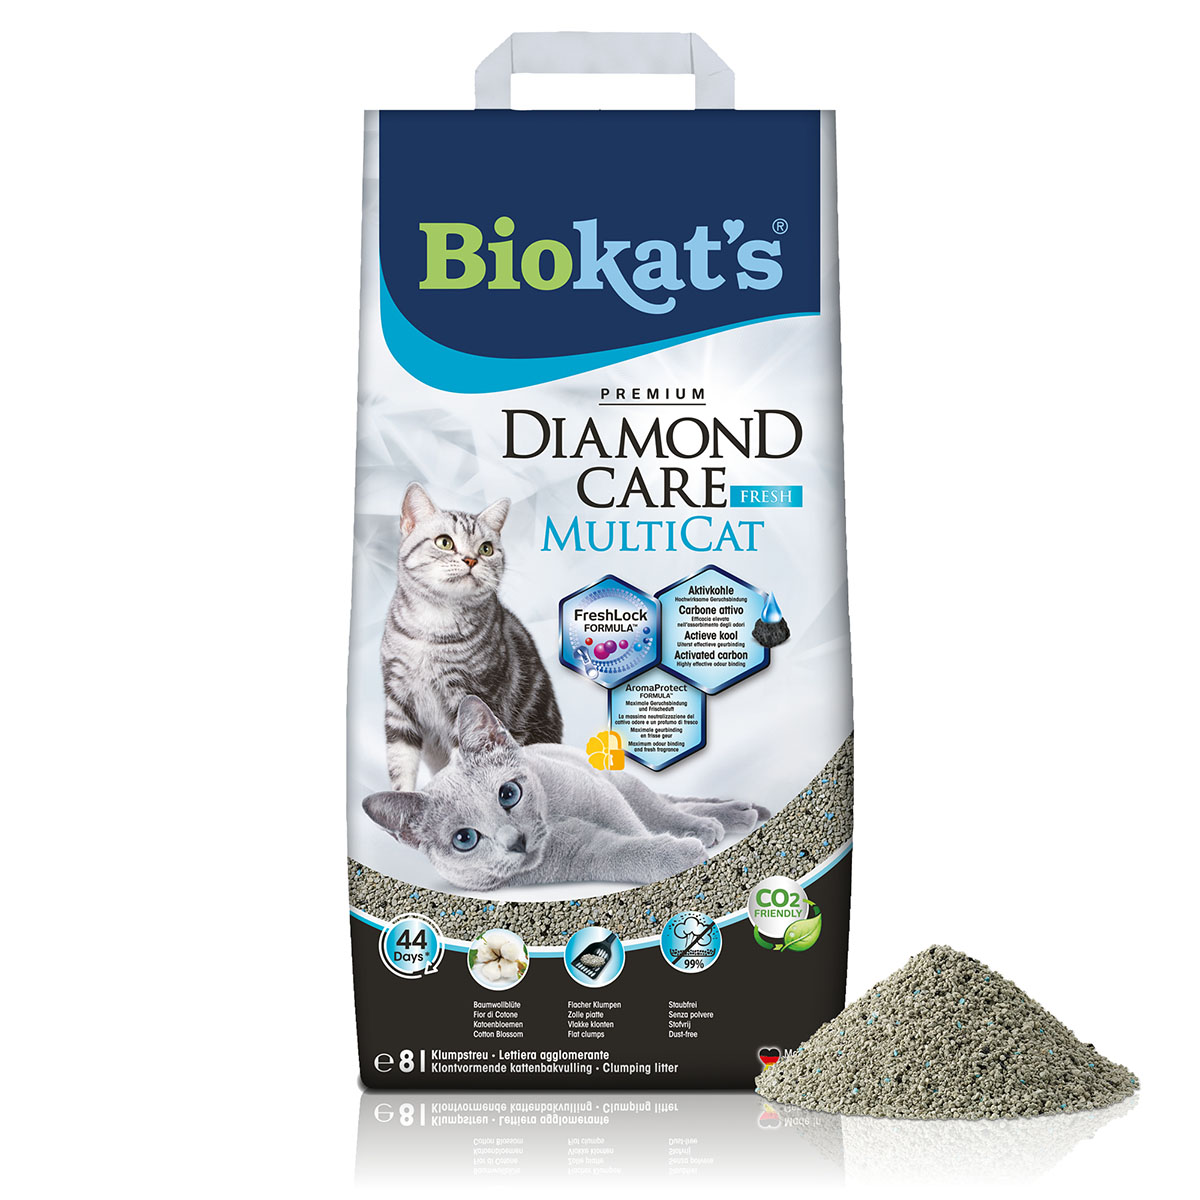 Biokat’s Diamond Care MultiCat Fresh